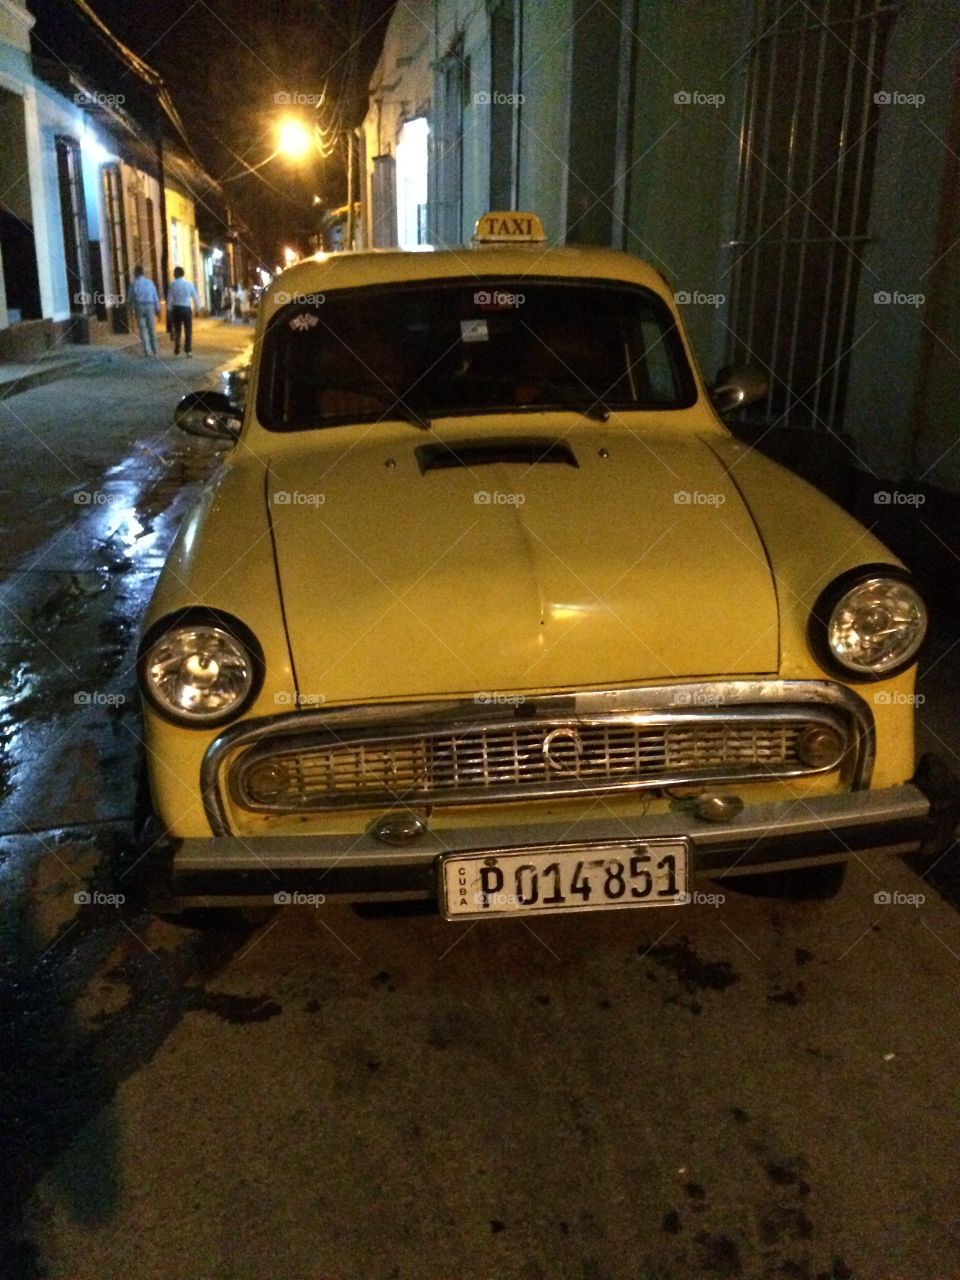 Old car in Cuba